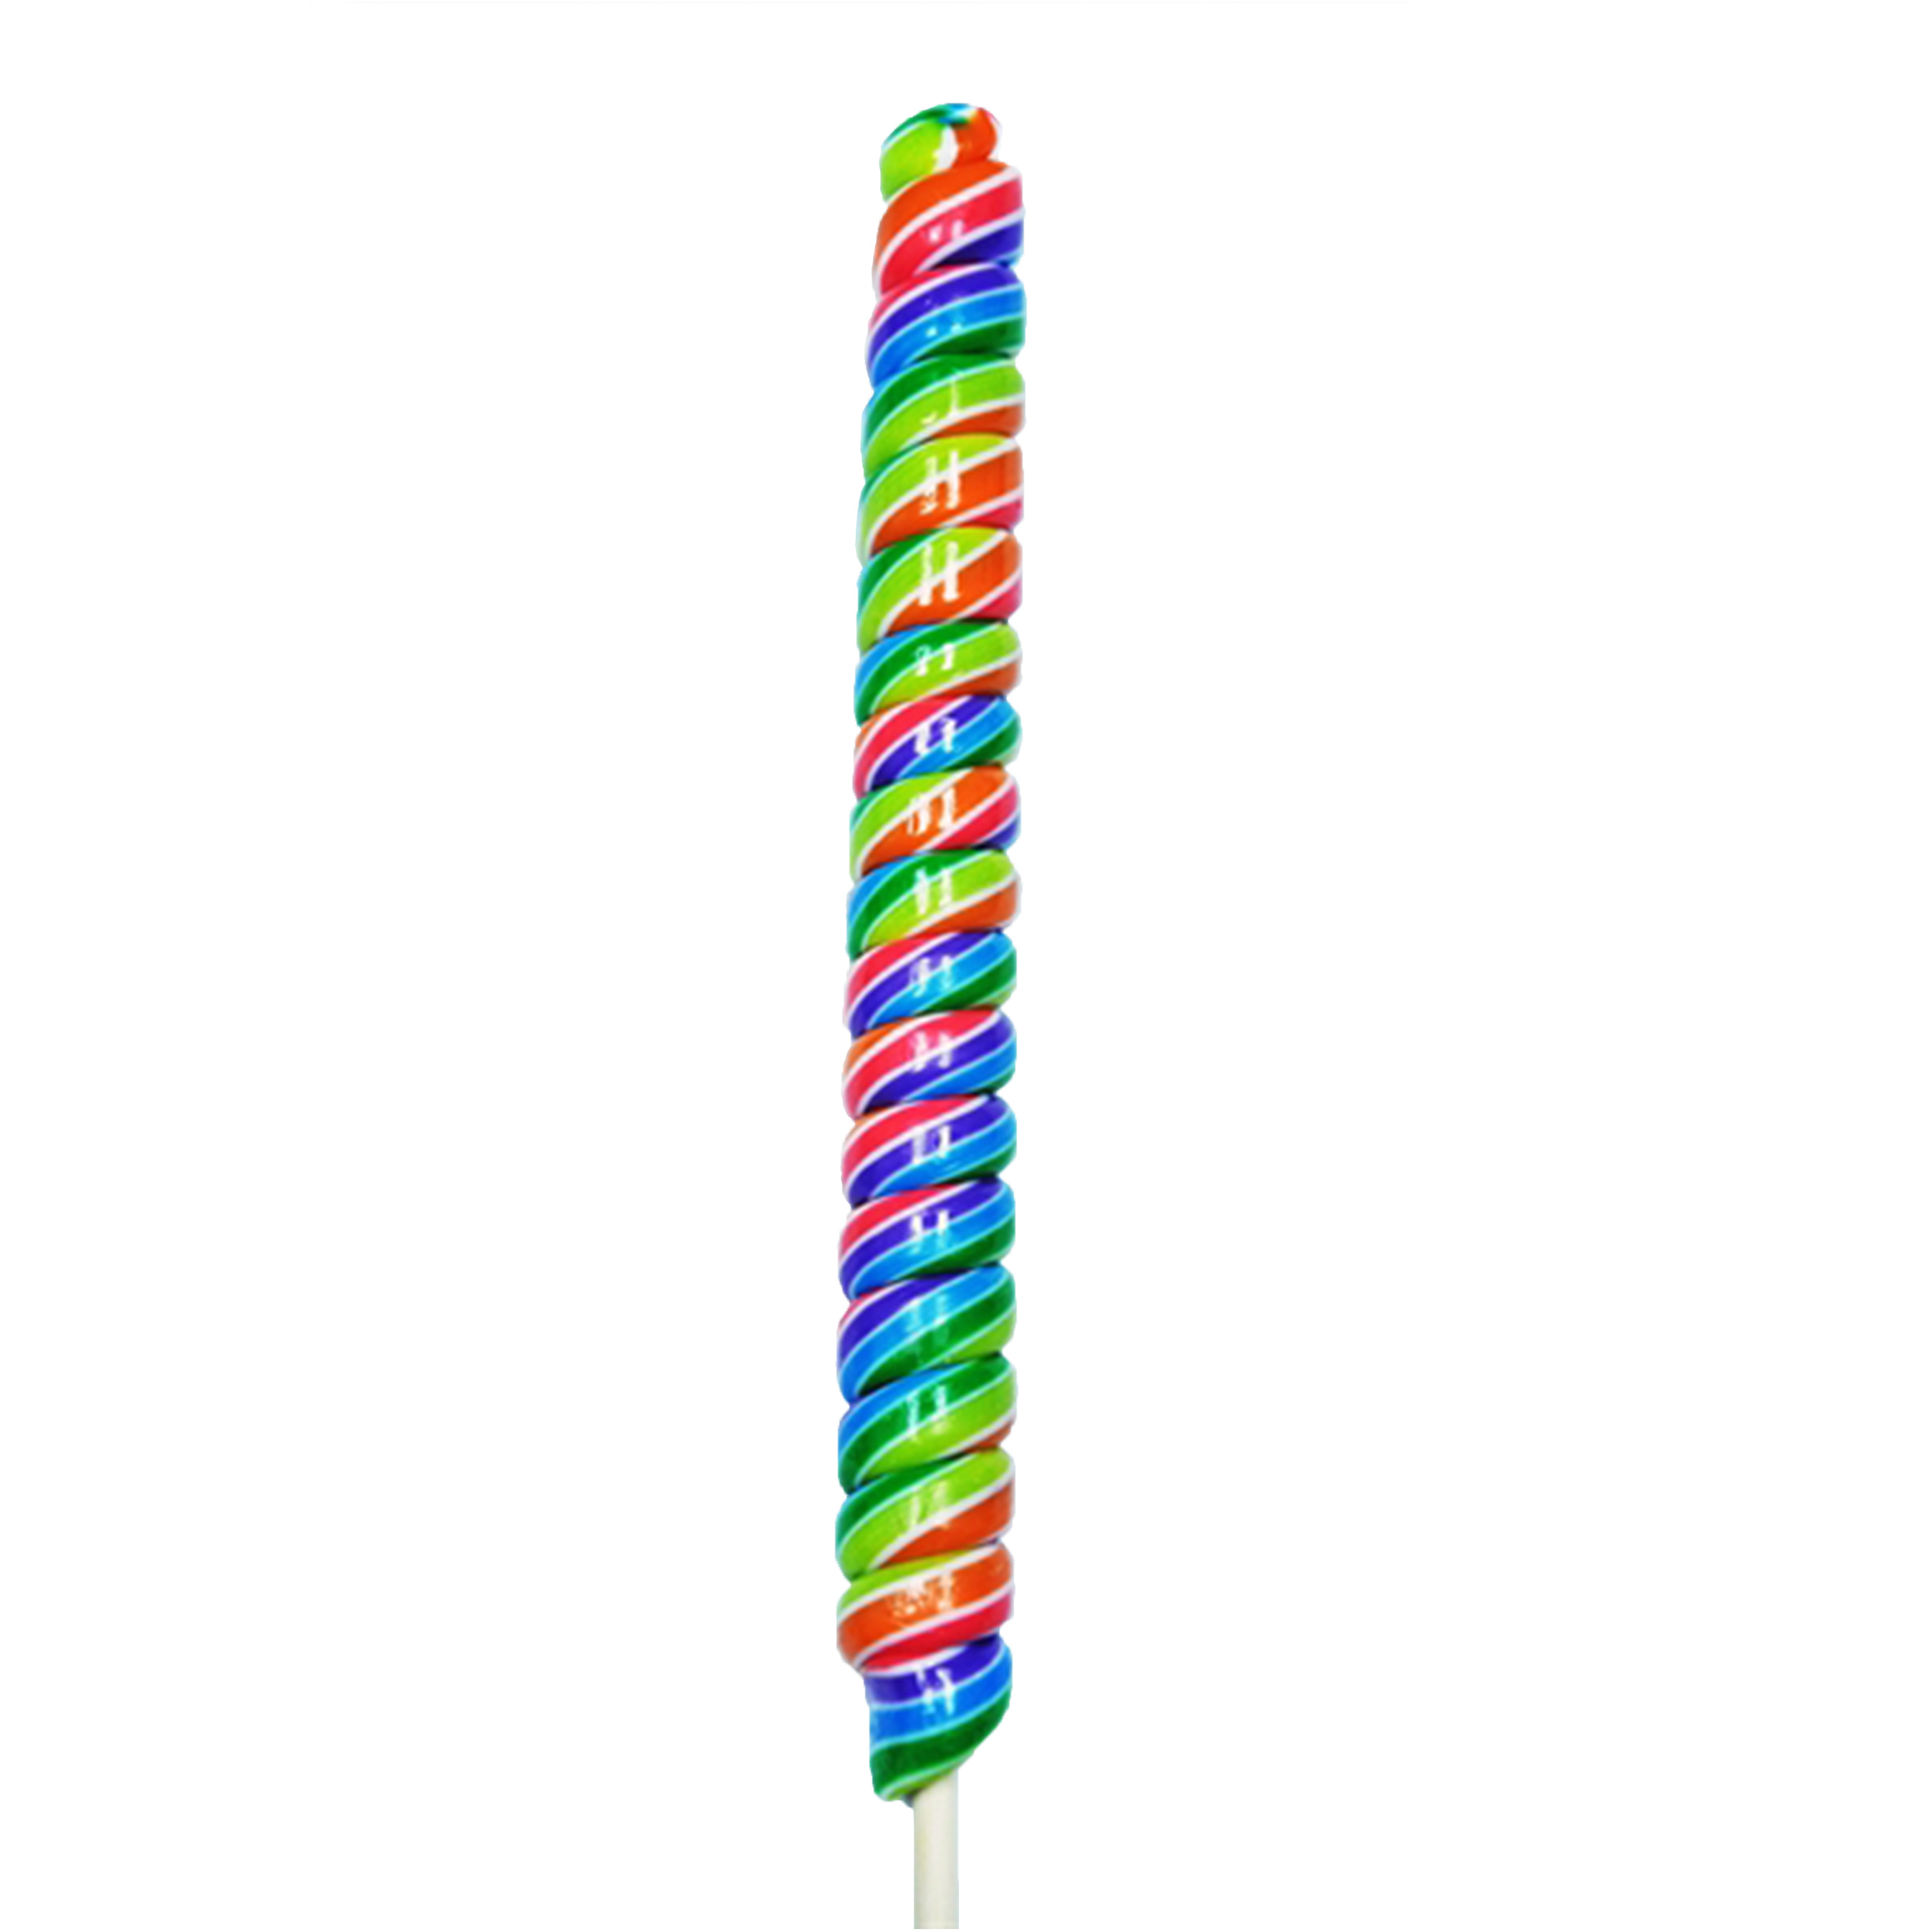 Rainbow style, watermelon flavor. Krazi Twist Large long stick. 